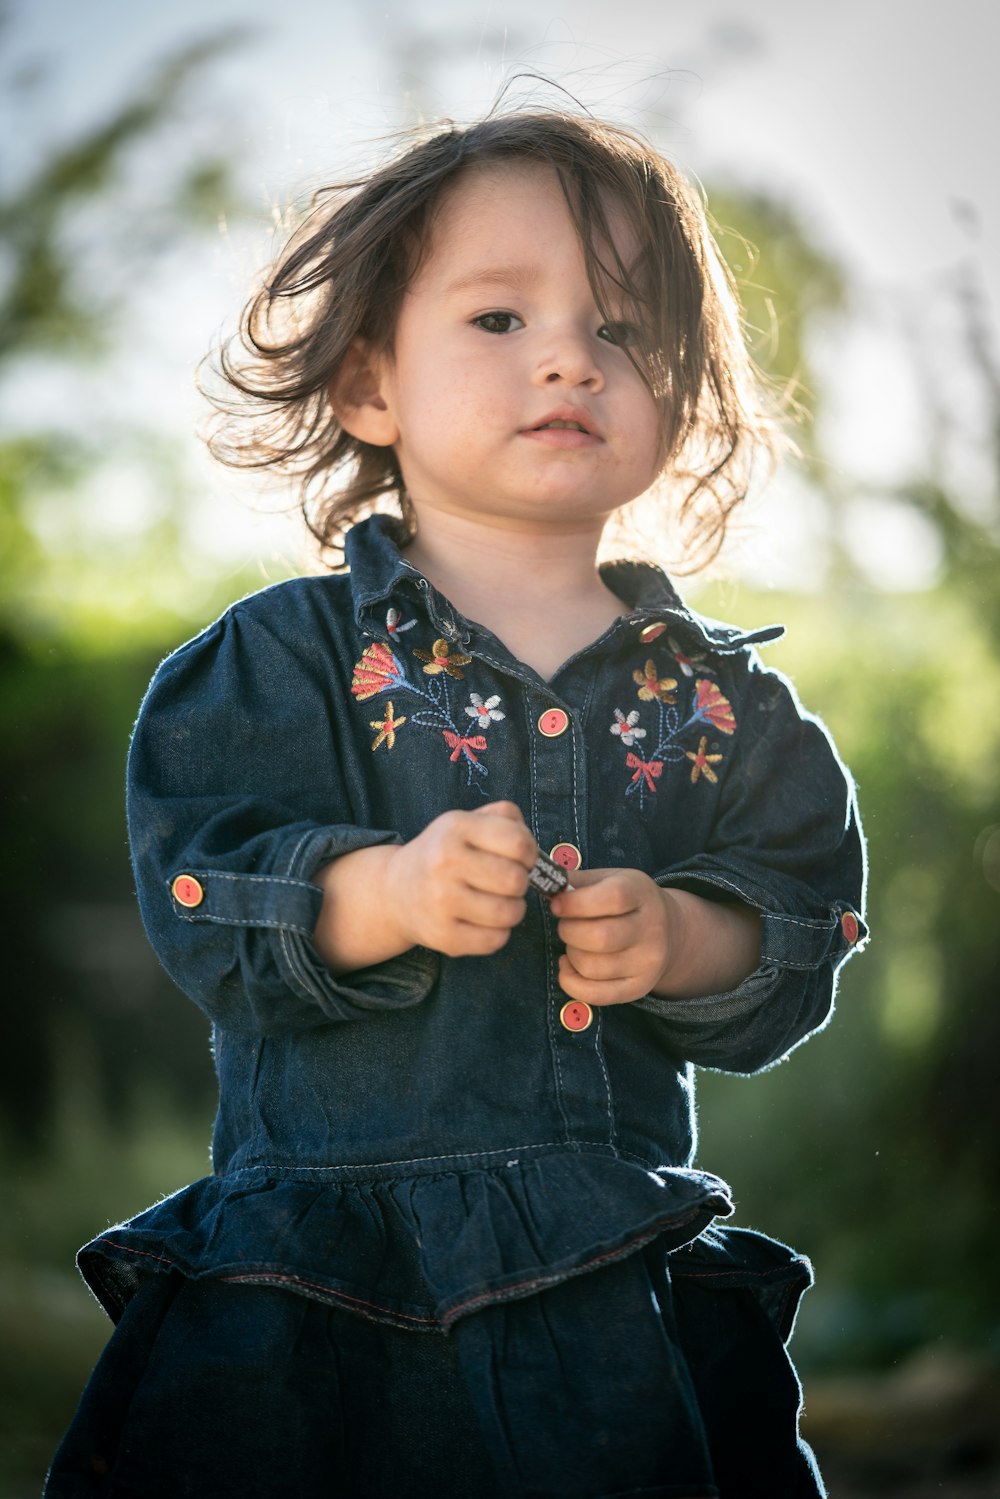 a little girl in a denim dress standing in a field